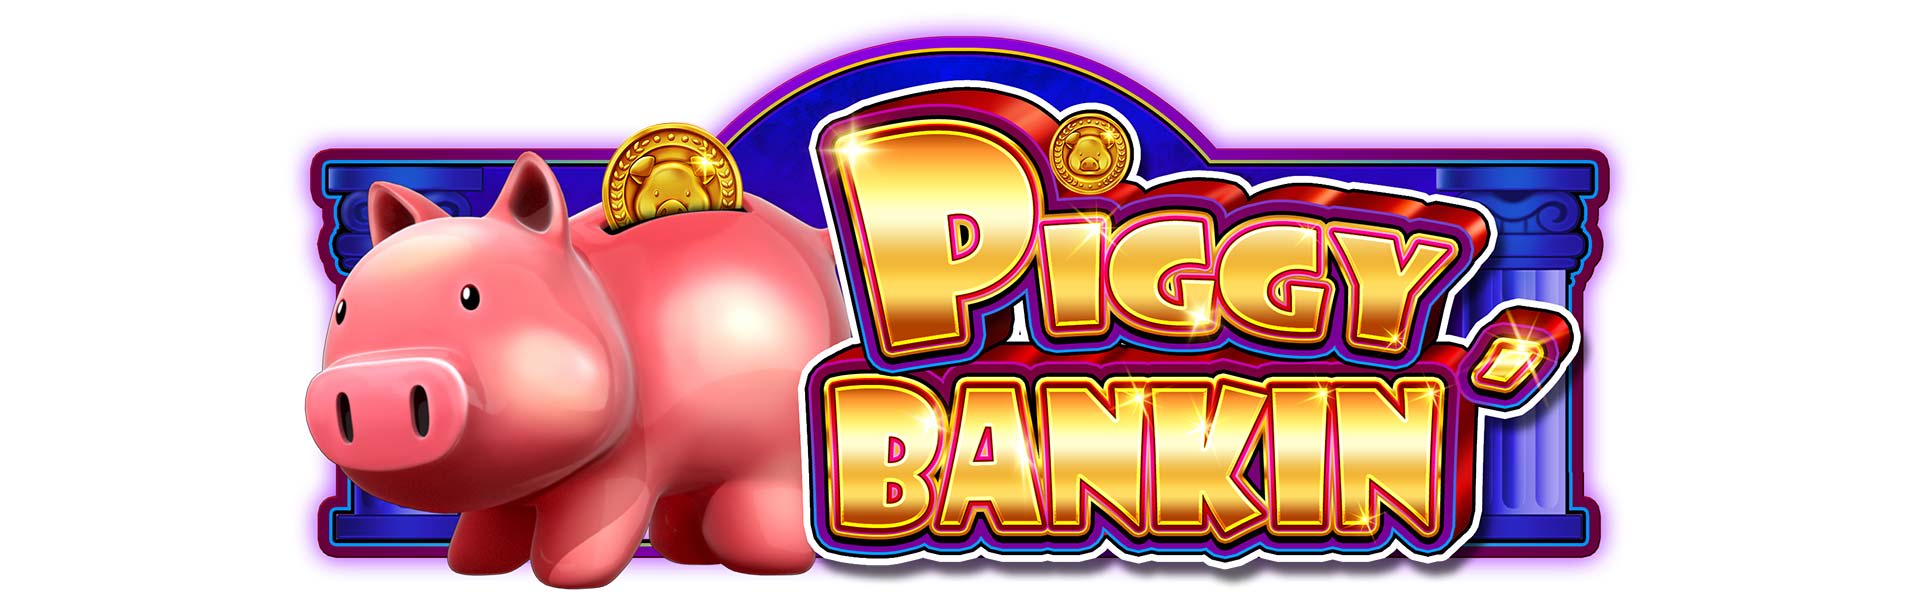 Piggy Bankin Slot